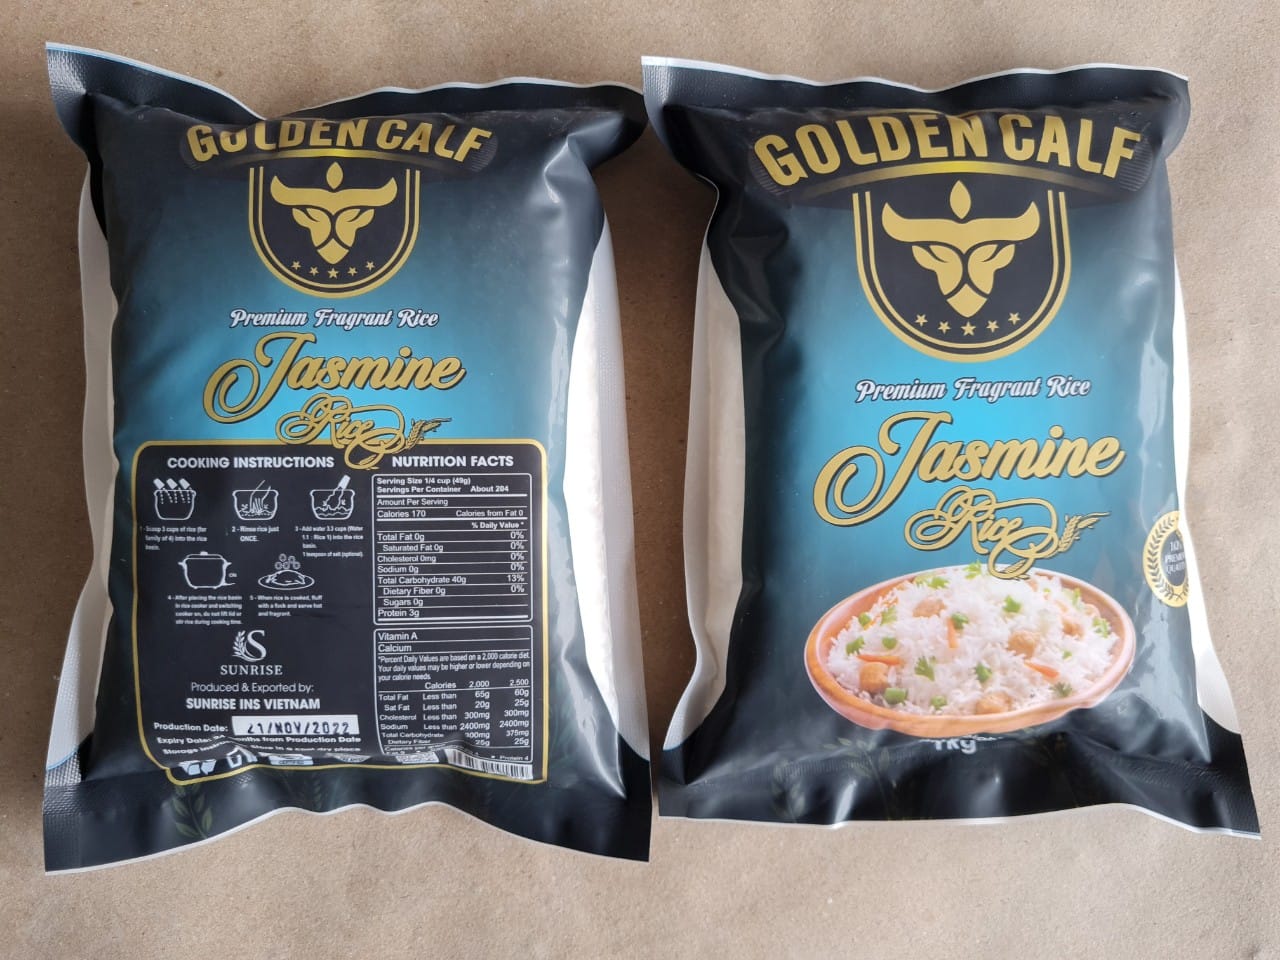 Jasmine rice from Vietnam 0084 909071104